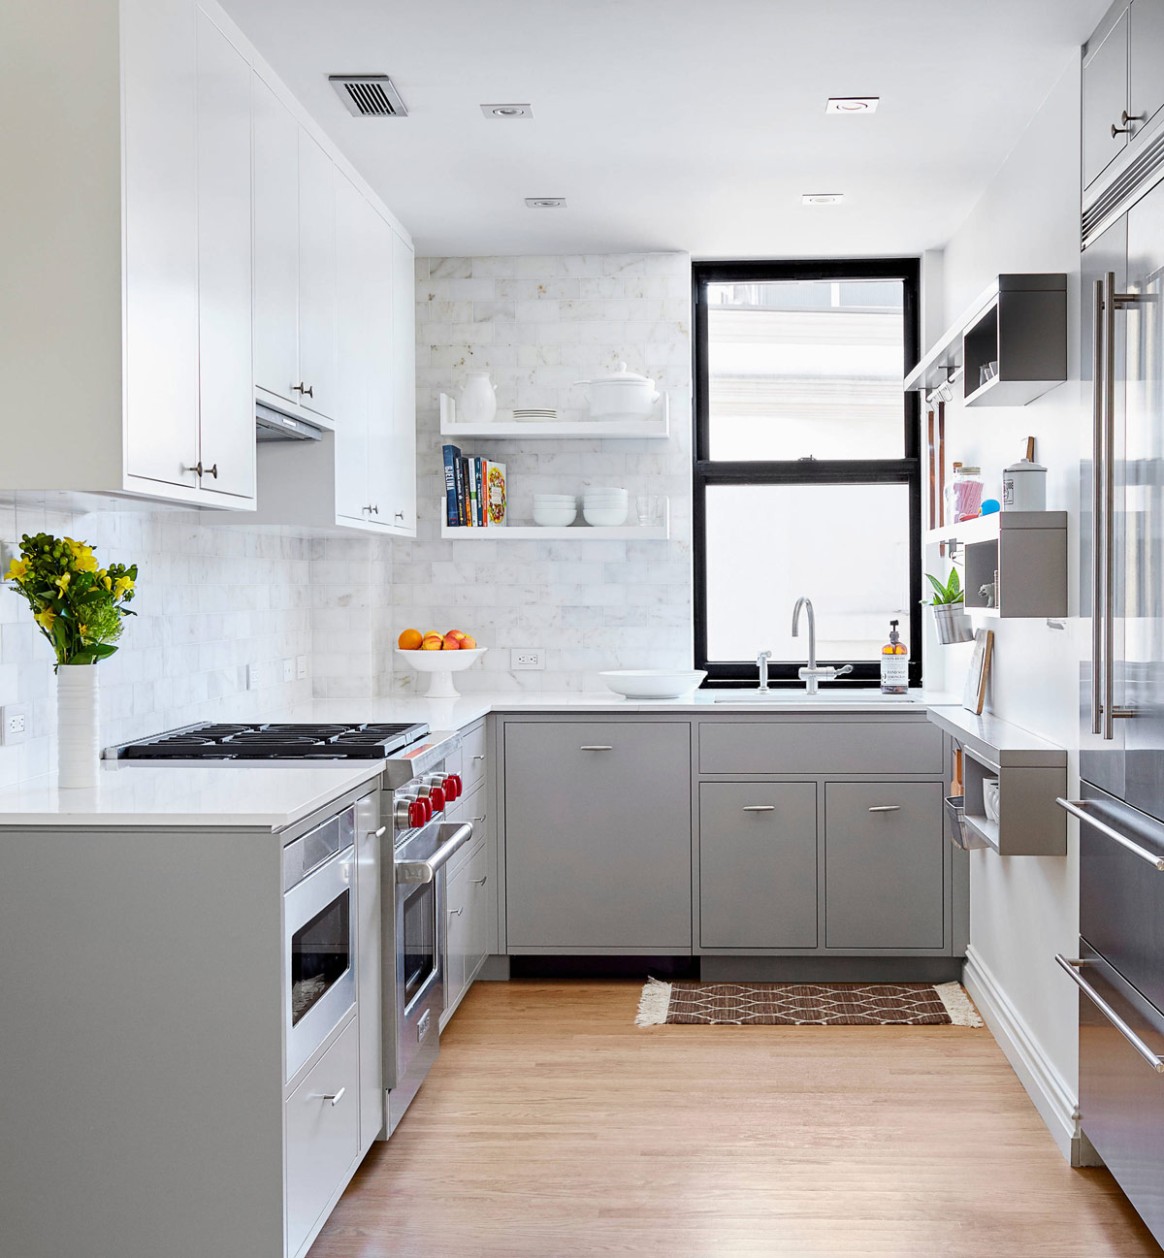 4 Gorgeous Grey and White Kitchens that Get Their Mix Right - white and gray kitchen ideas